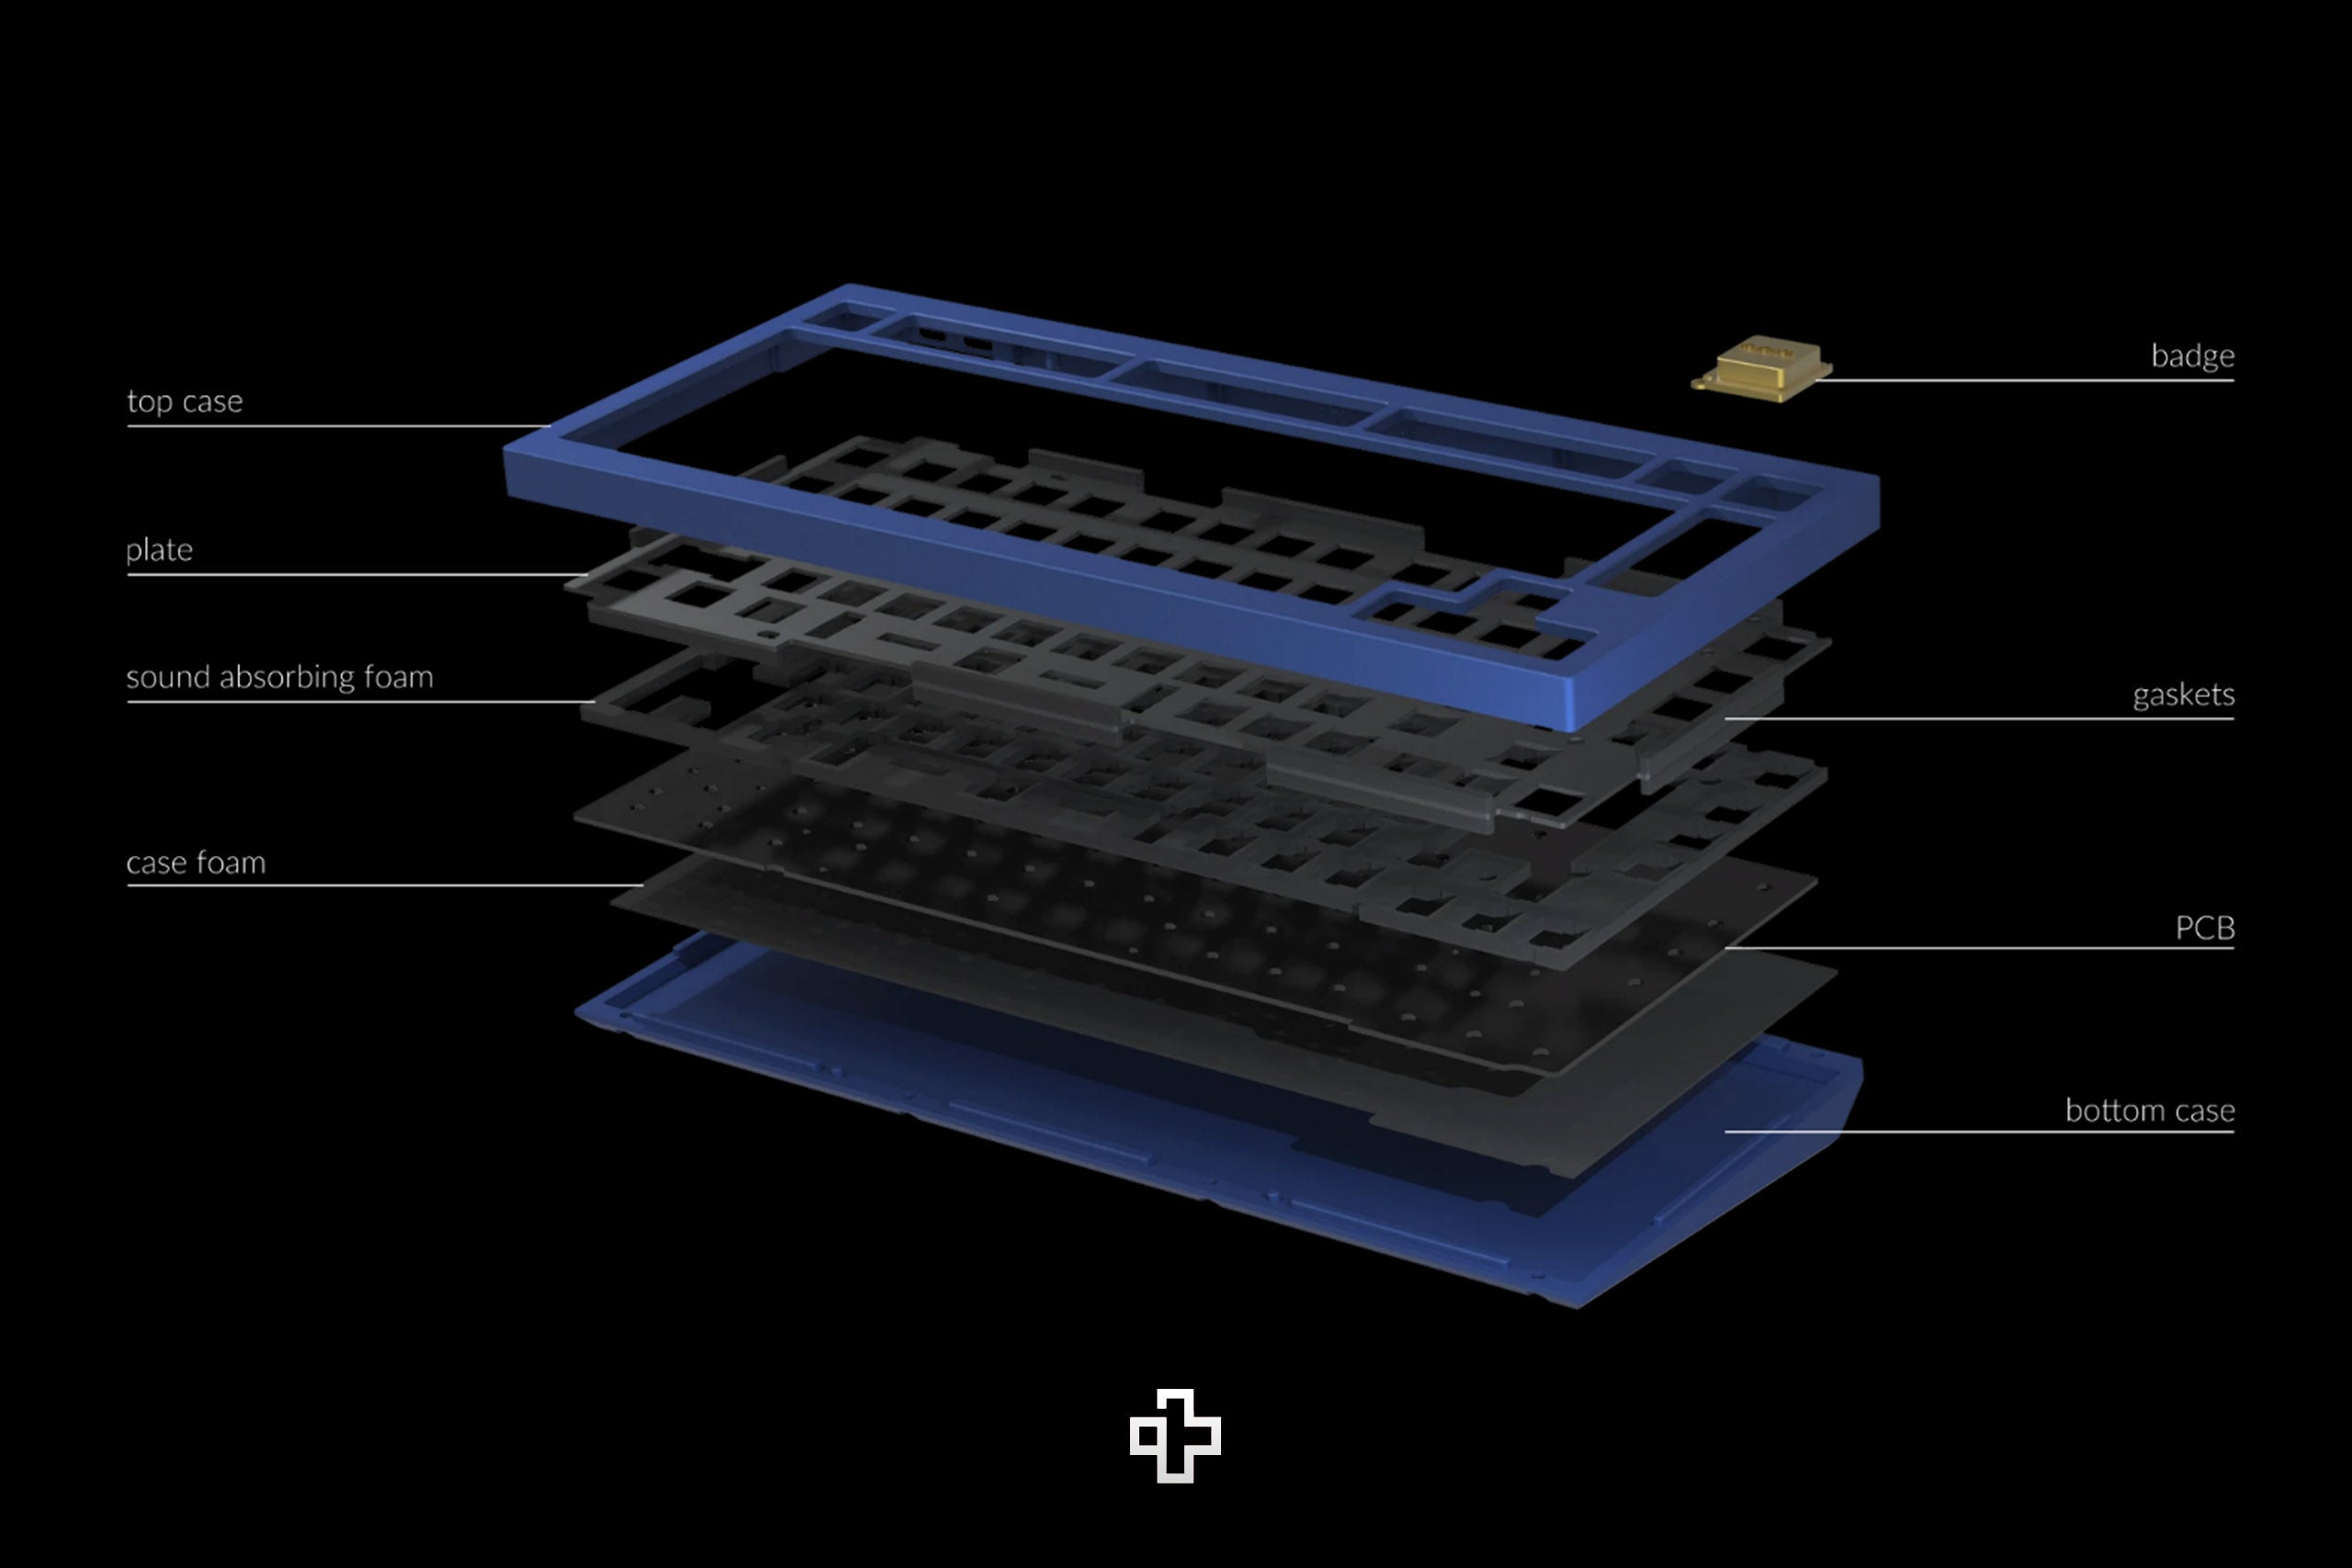 Keychron Q1 Hotswap Aluminium Tastatura Mecanica - QwertyKey